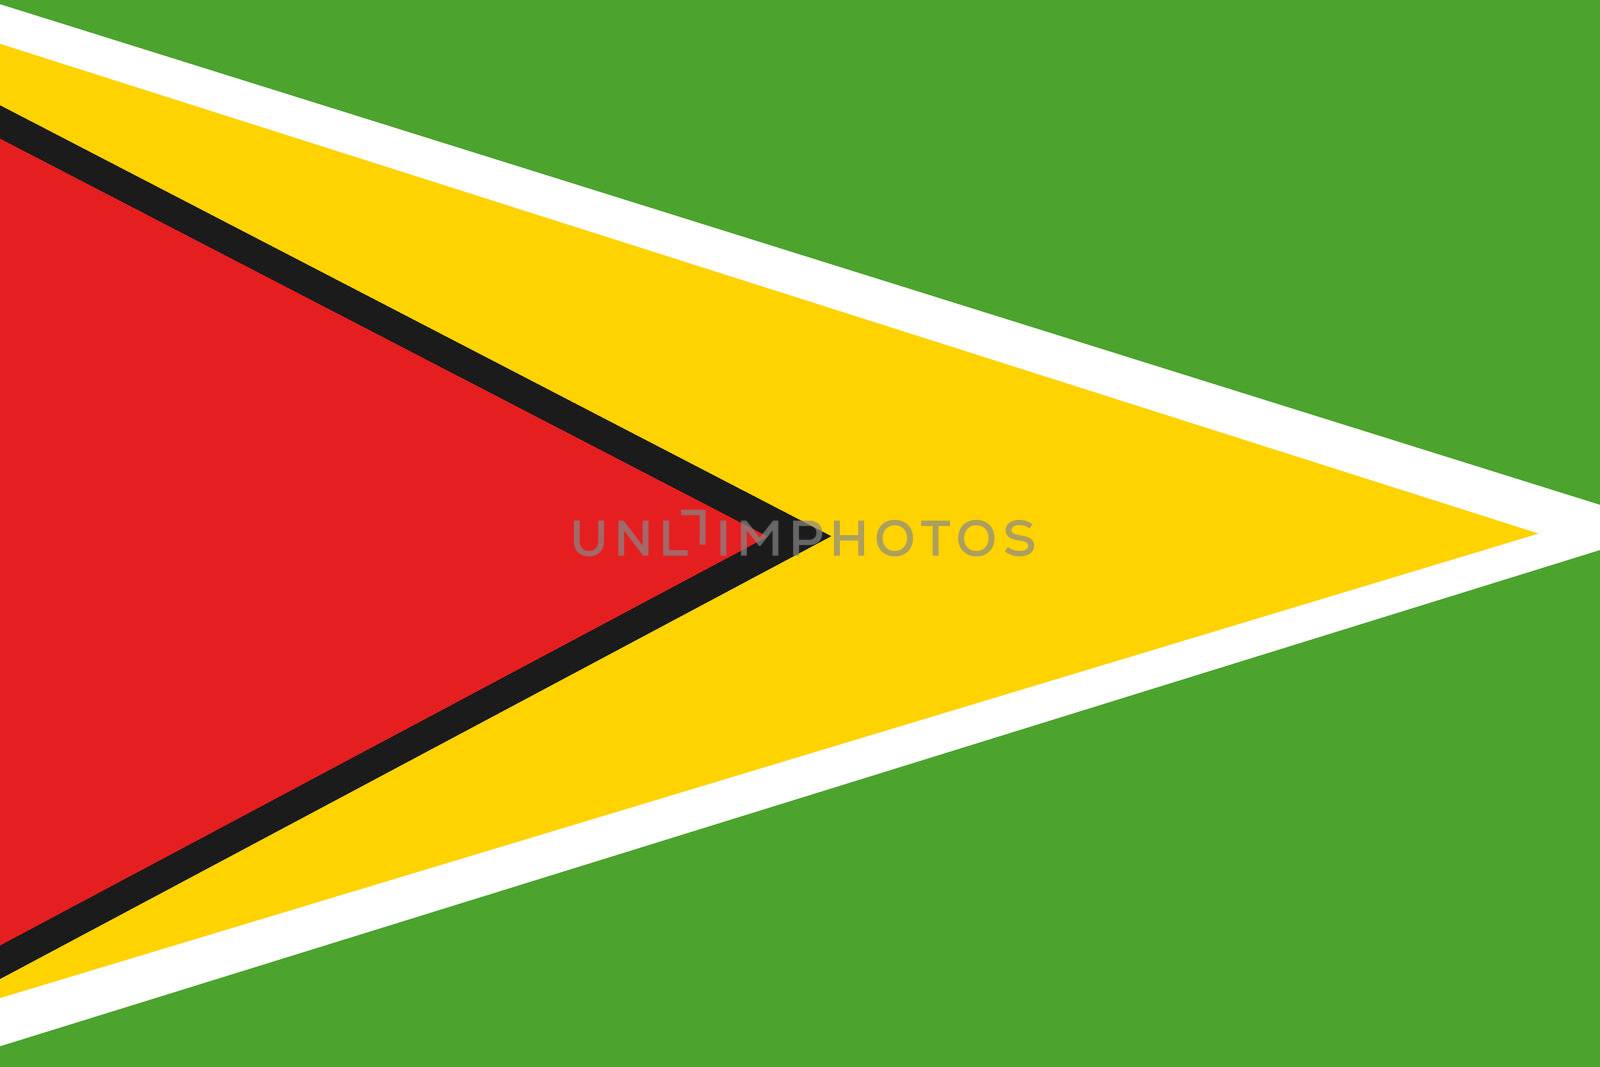 An illustration of the flag of Guyana